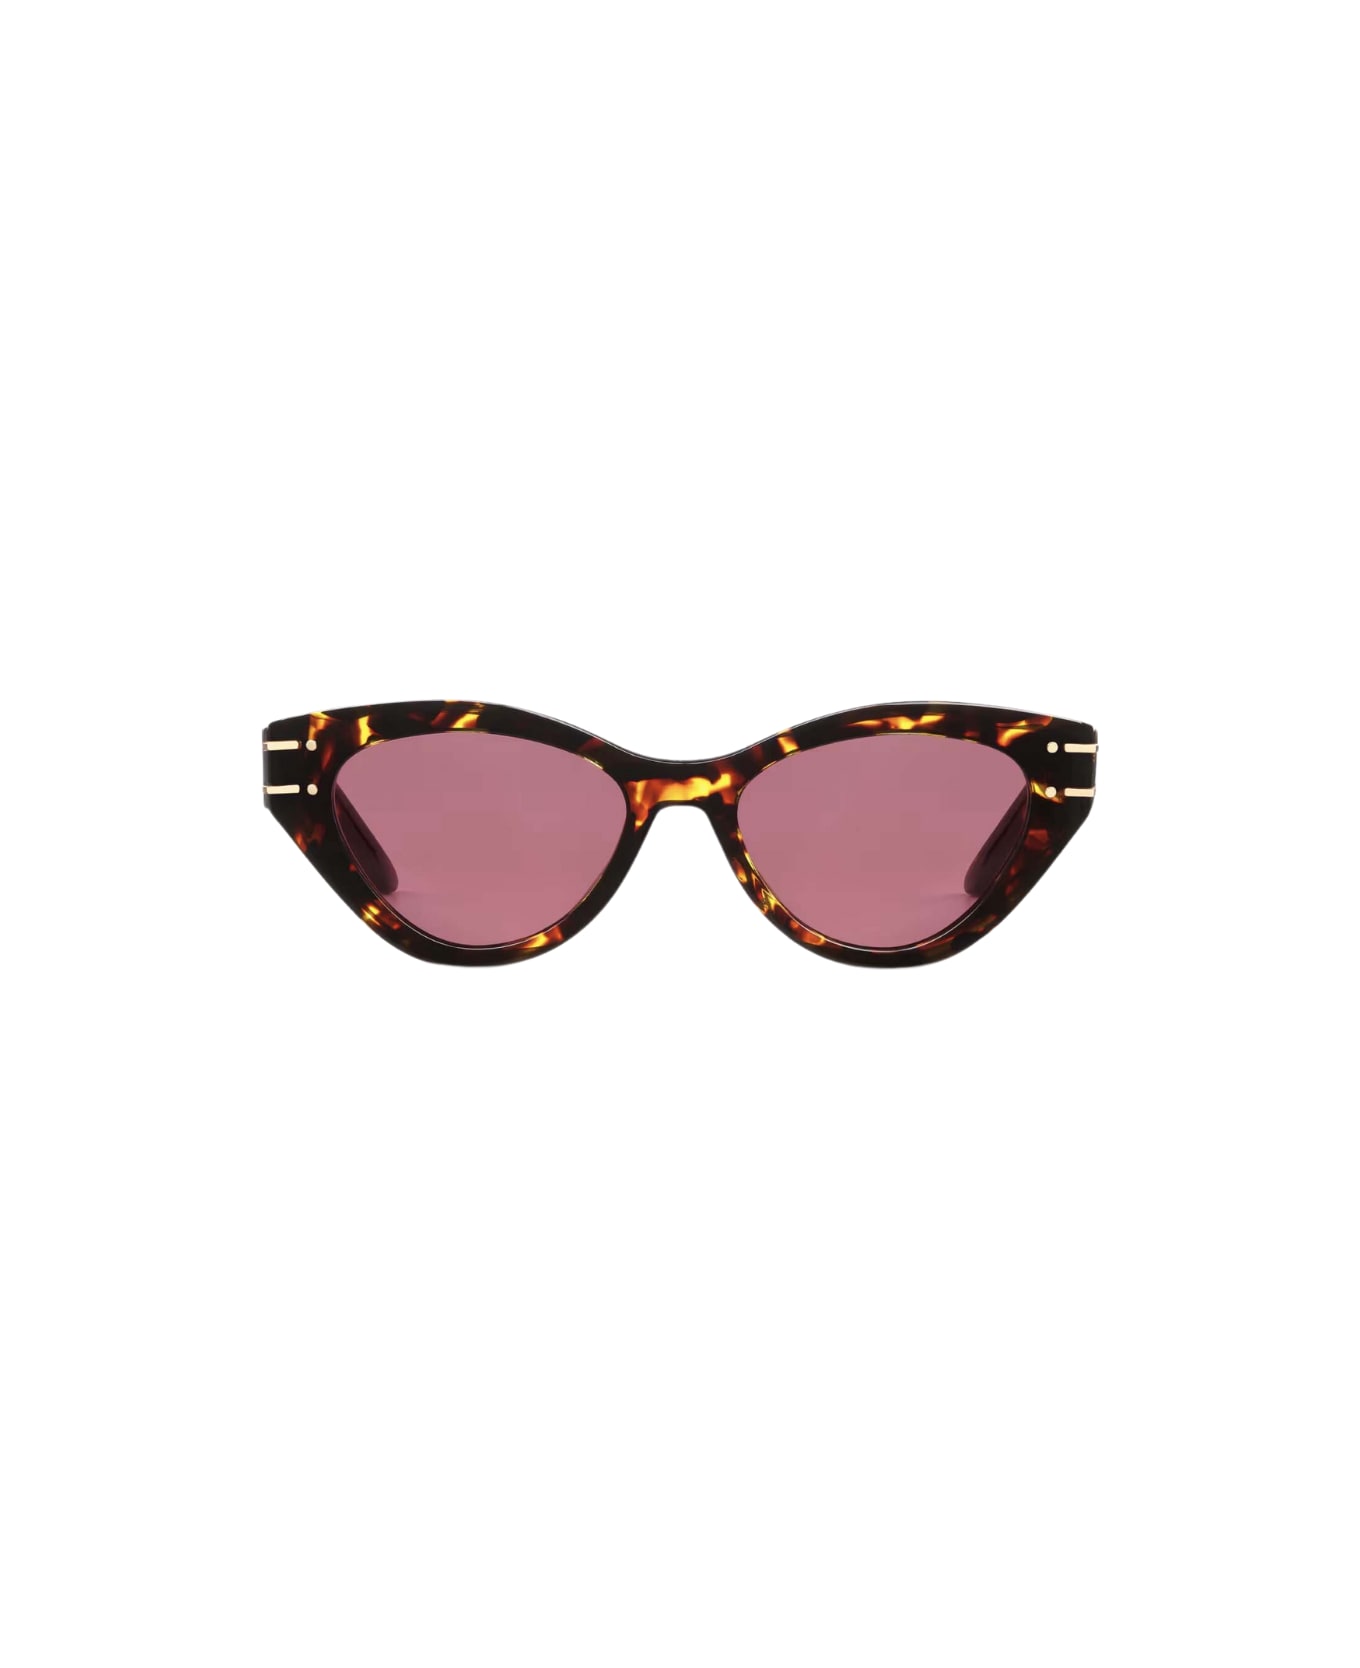 Dior Eyewear Sunglasses - Havana/Rosa